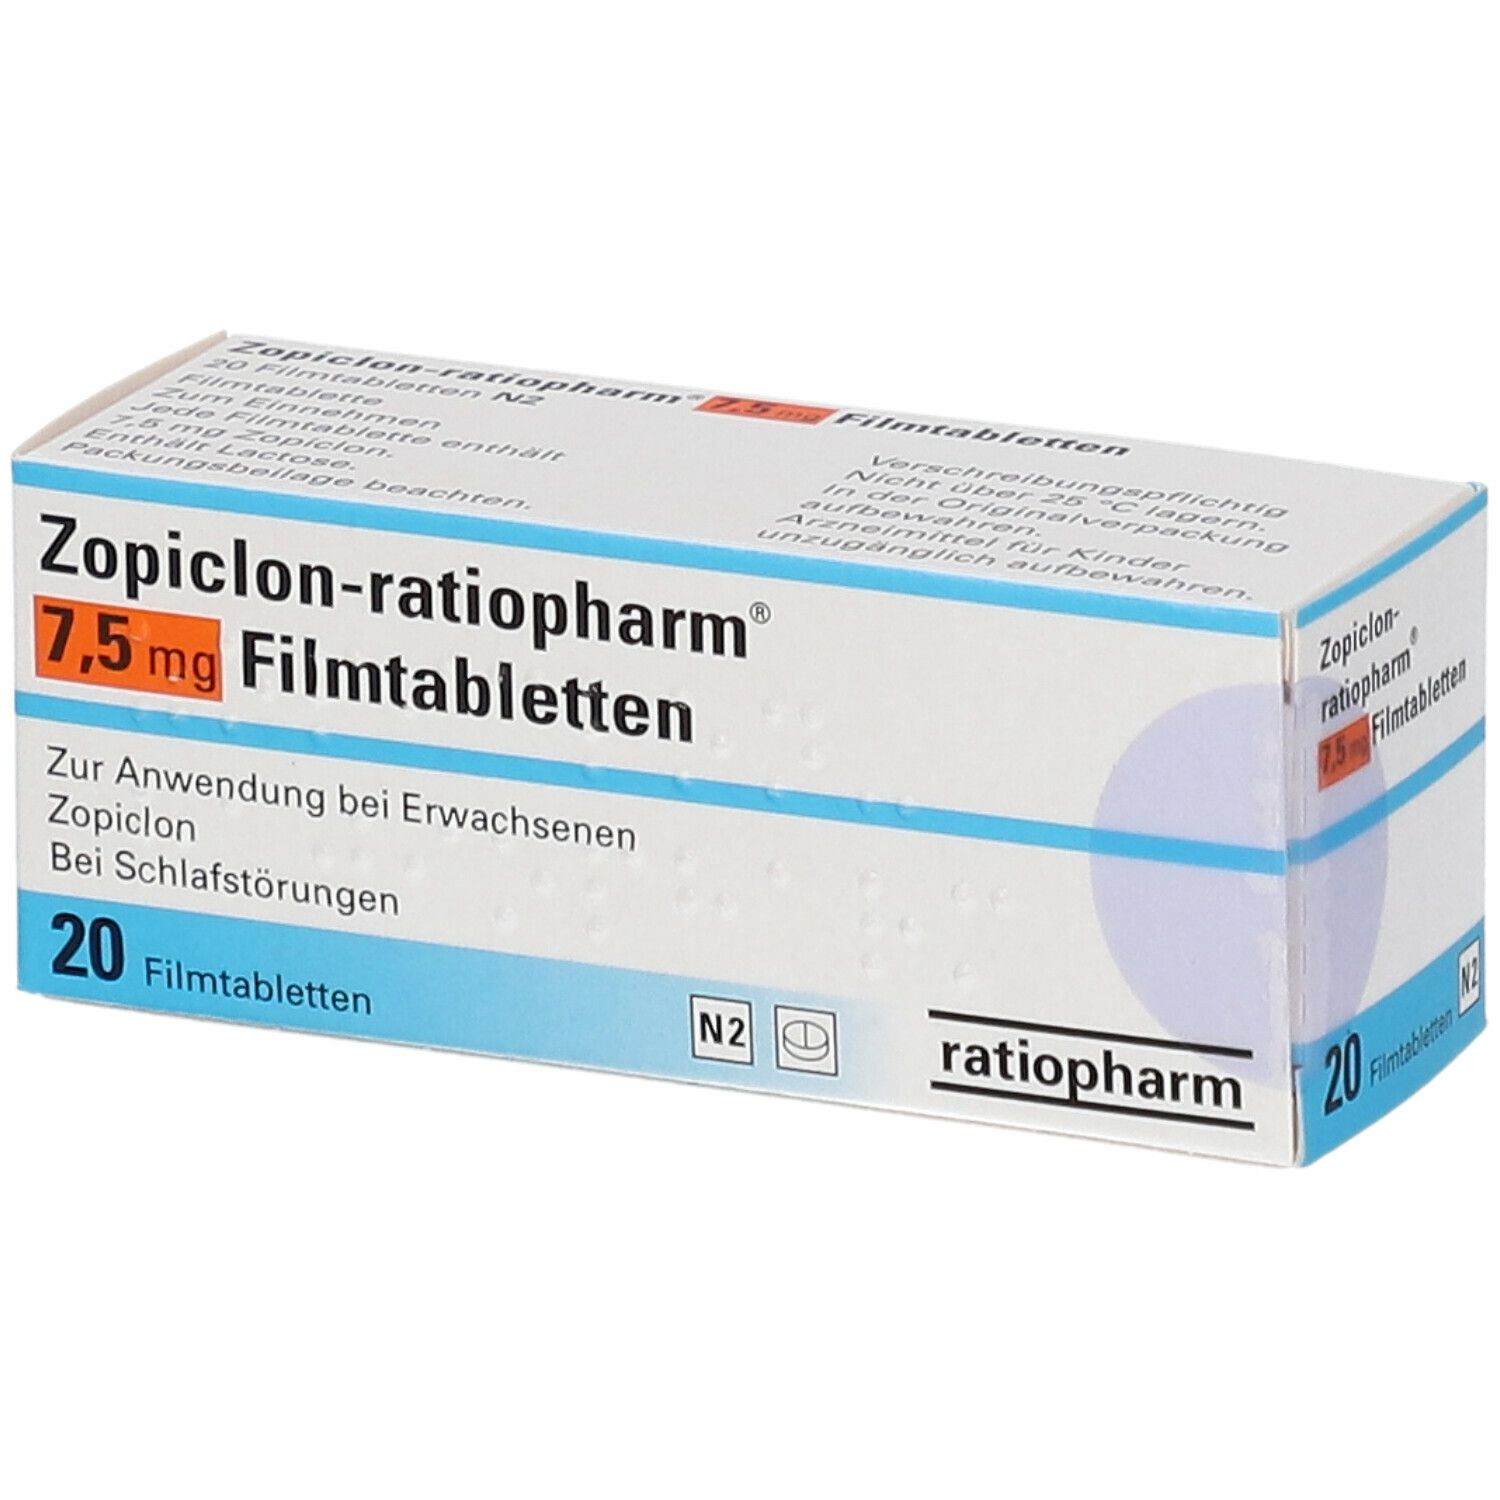 Zopiclon-ratiopharm® 7,5 mg 20 St - shop-apotheke.com